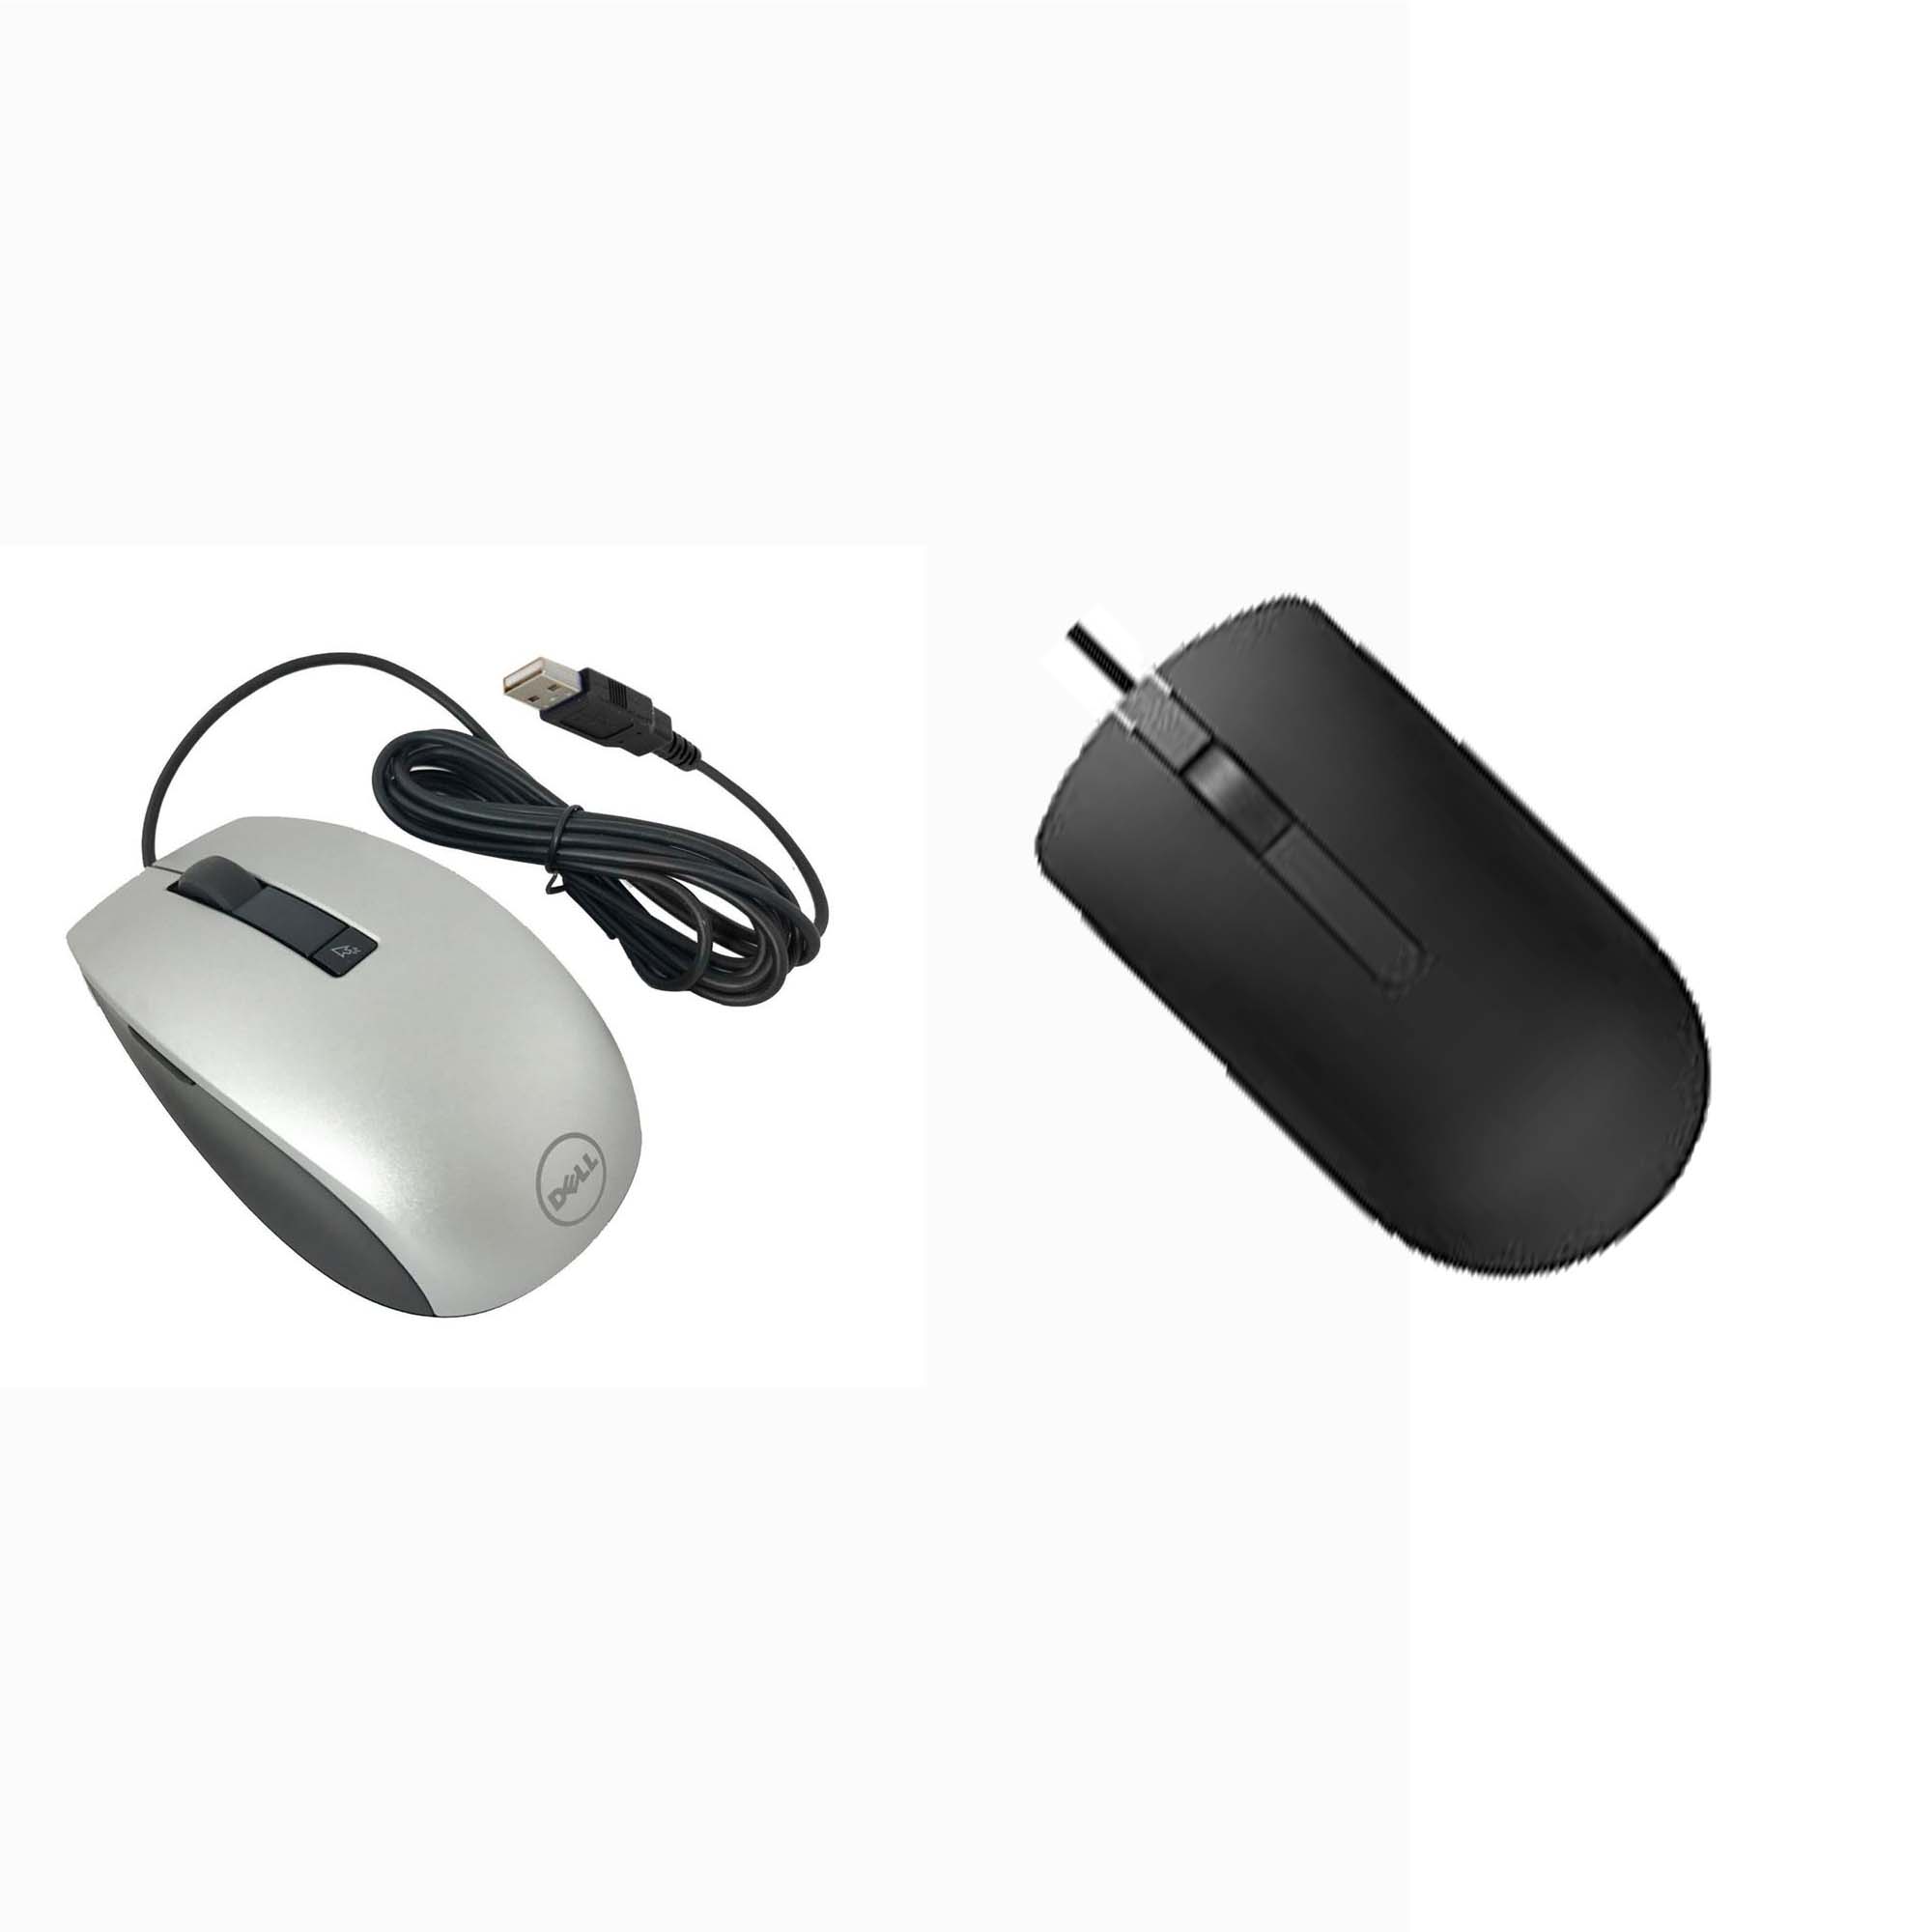 ORIGINAL MOUSE BRAND OEM USB ماوس اورجينال ماركات عالميه ,Mouse